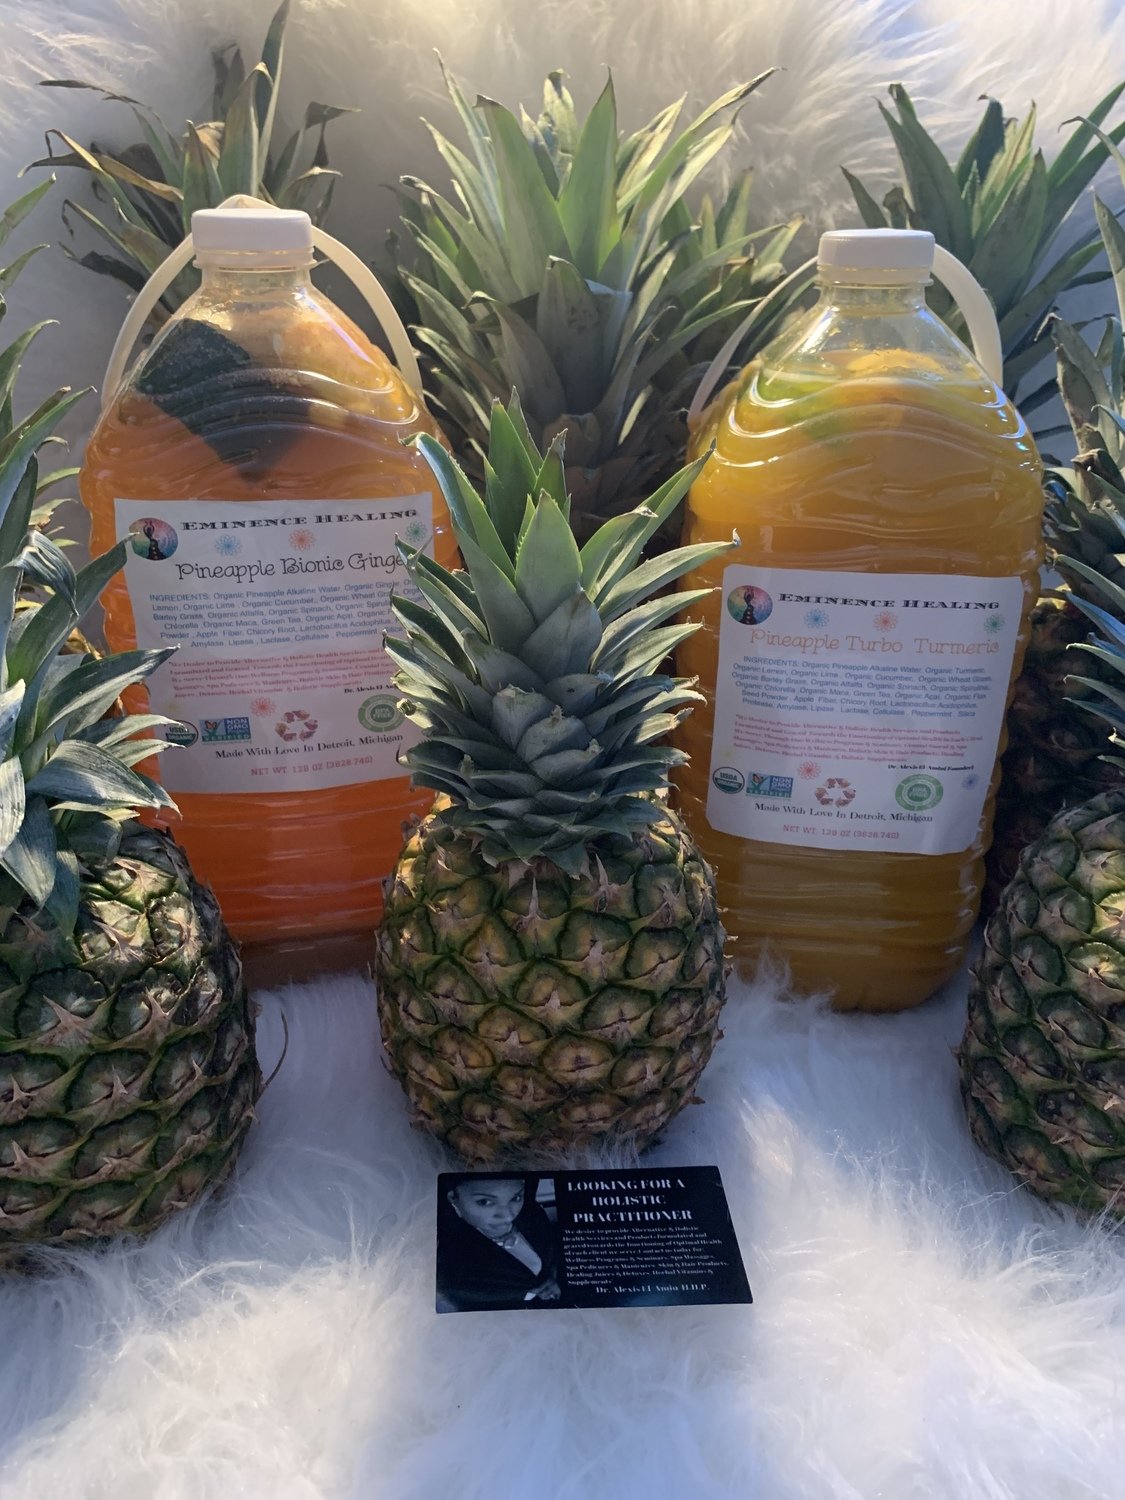 2 Gallon Pineapple Inflammation Tonic Combo